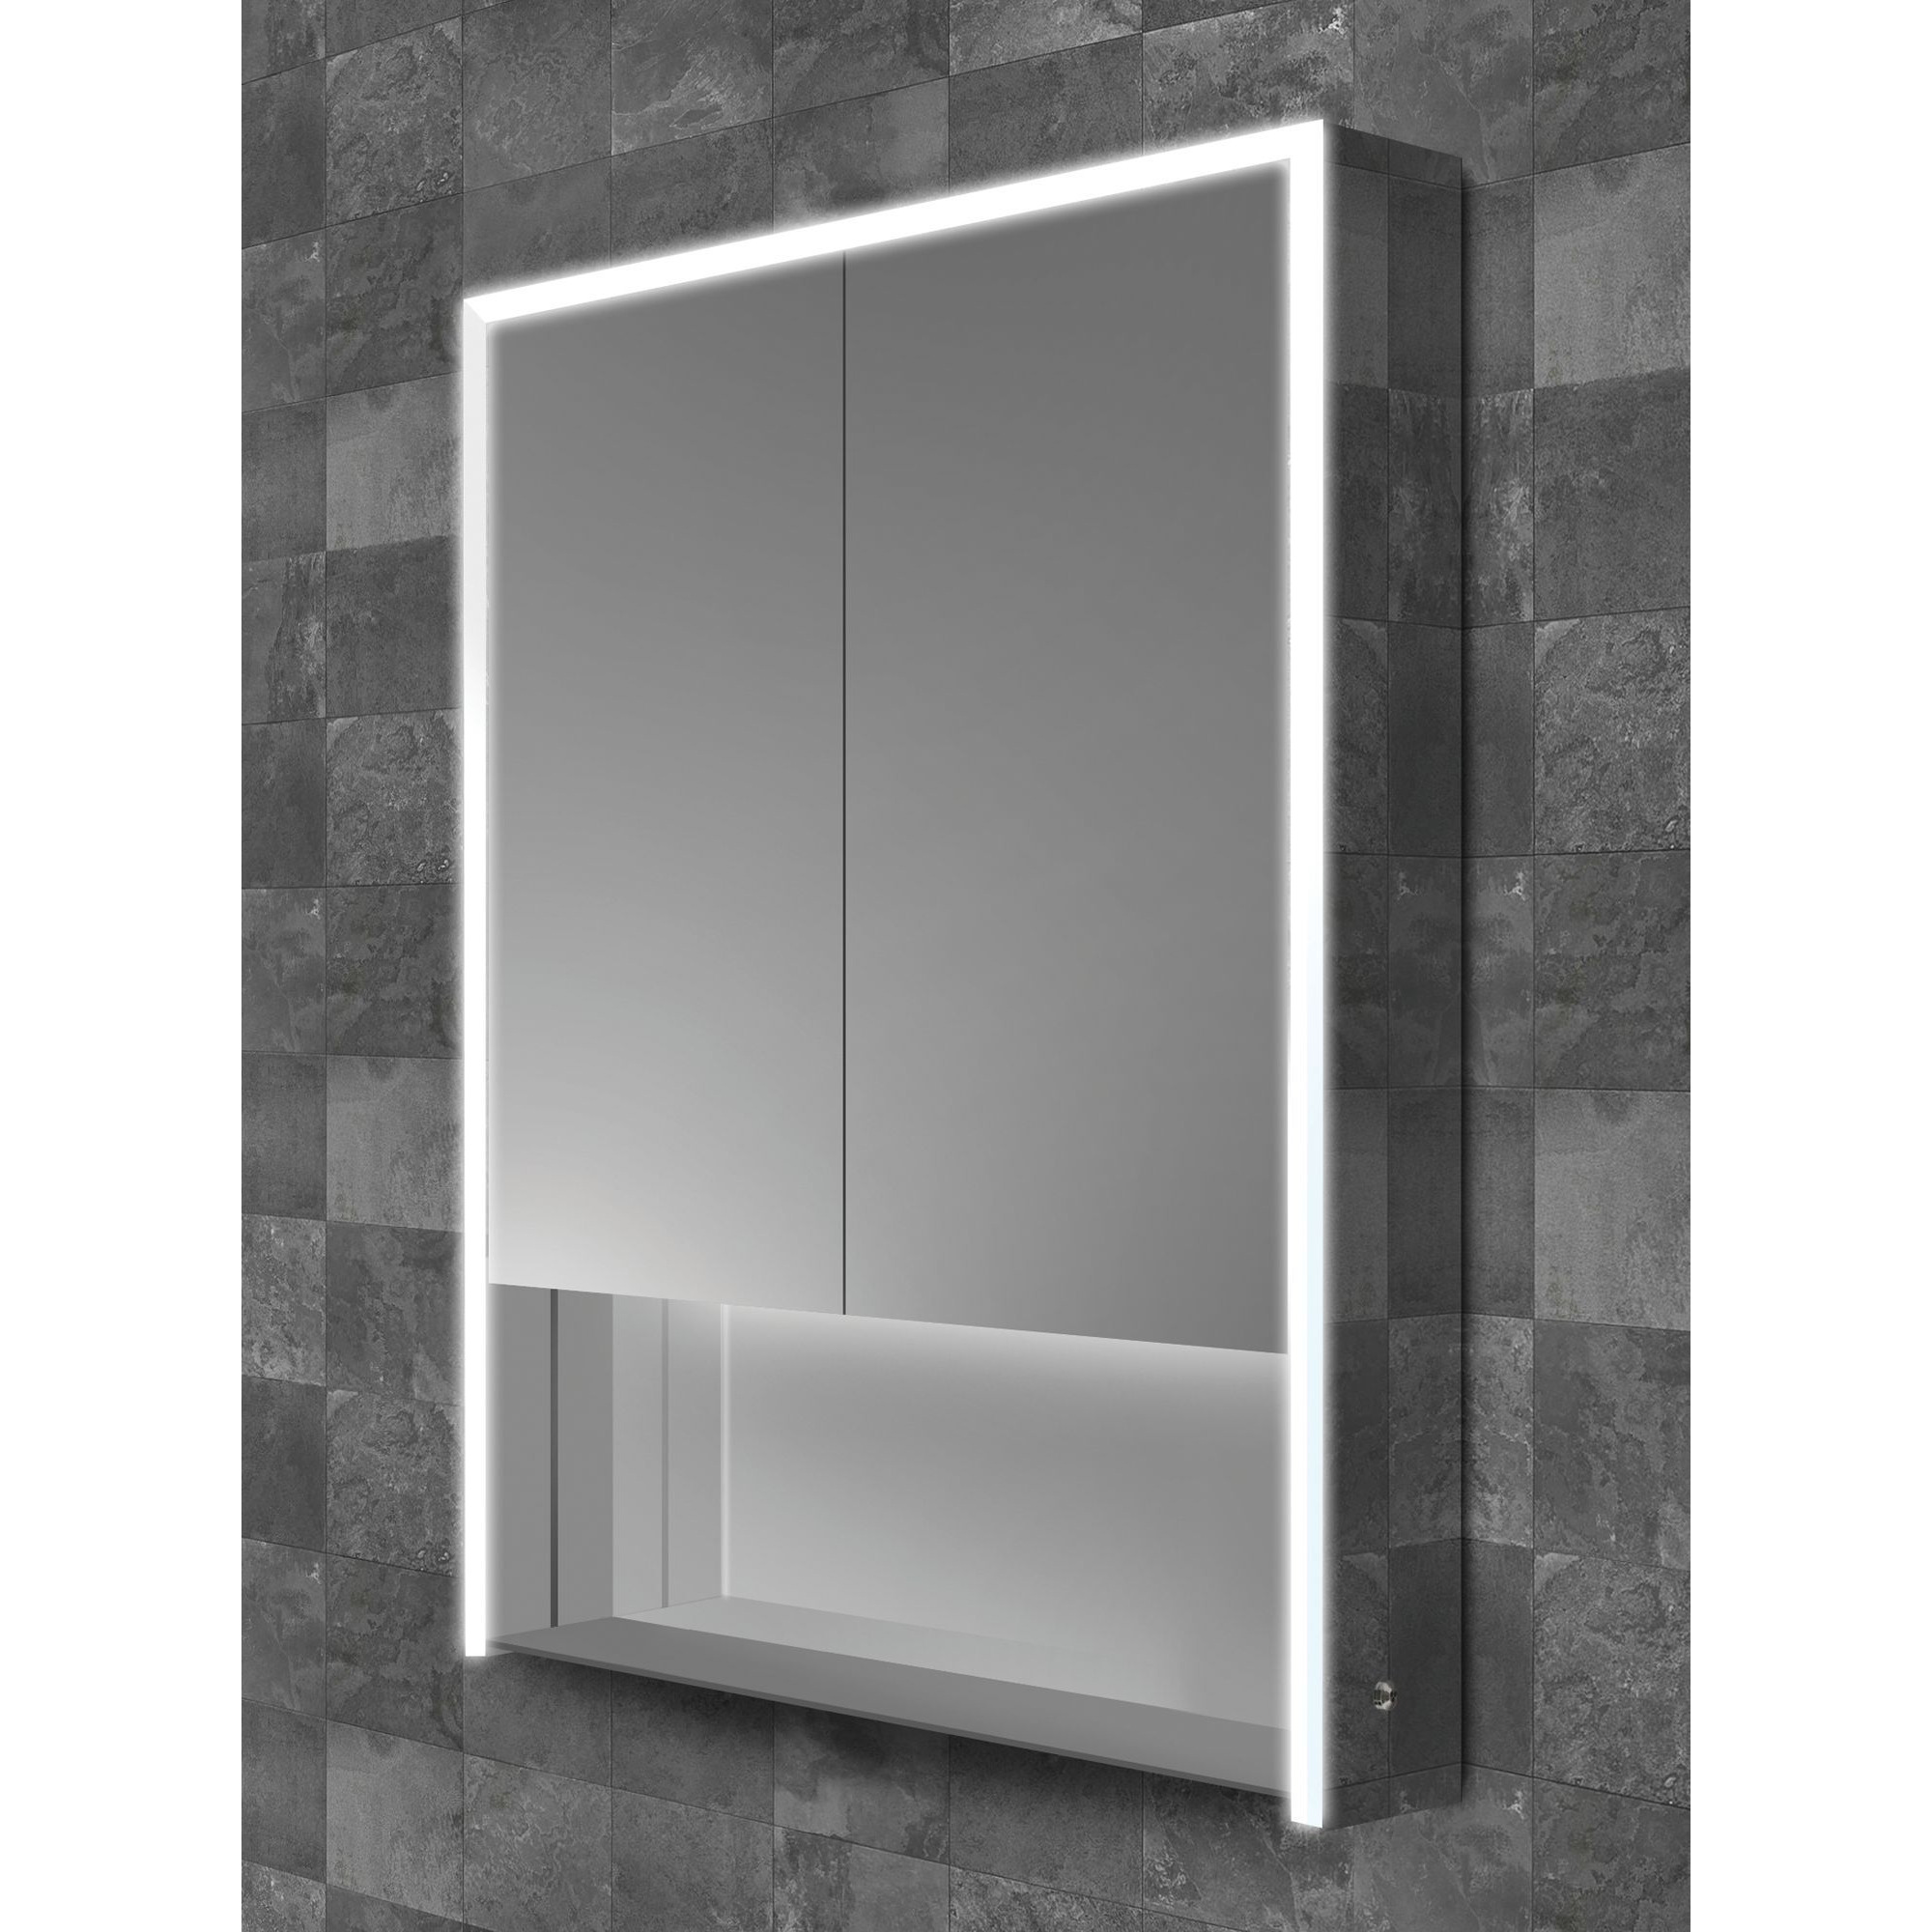 John Lewis Shelf Double Mirrored and Illuminated Bathroom Cabinet - image 1